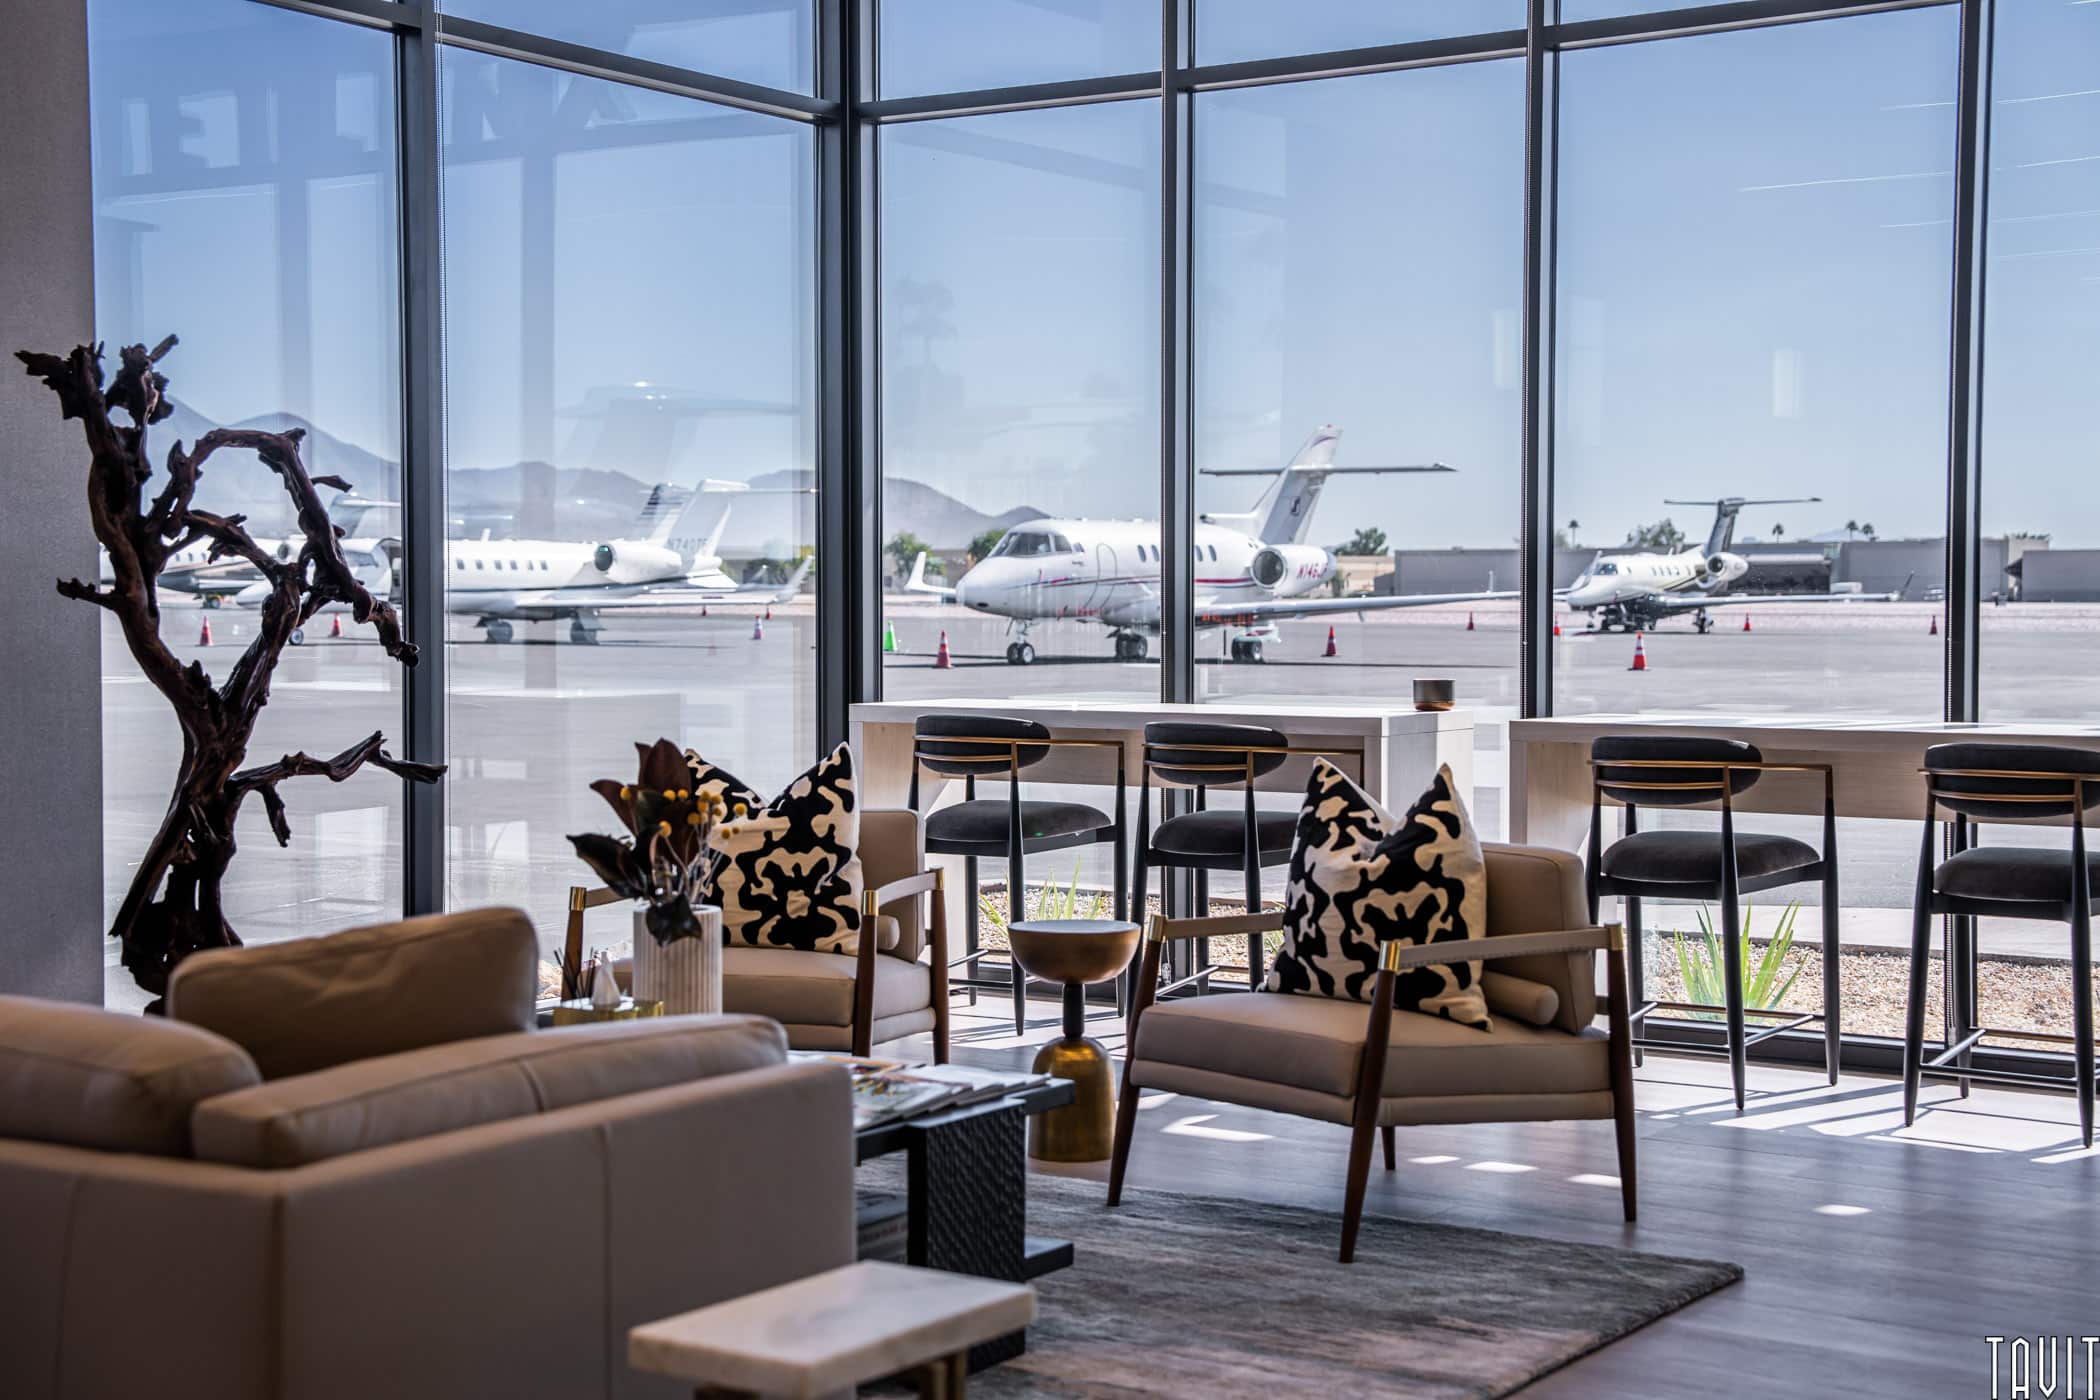 Jetlinx lobby view of airplanes